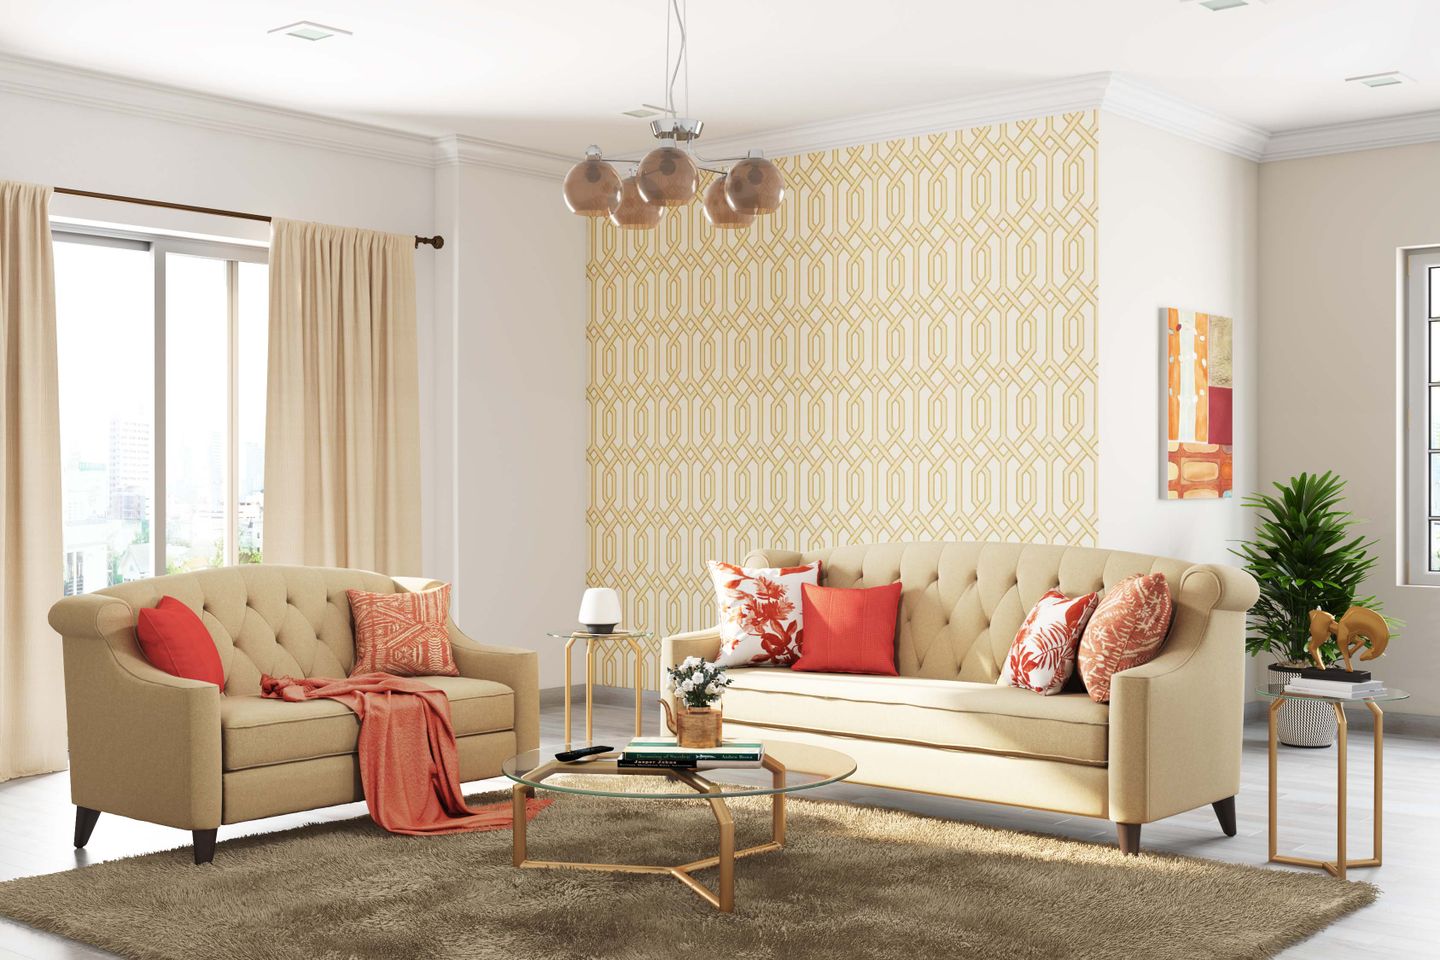 Living Room Wallpaper Design In Beige And White - Livspace